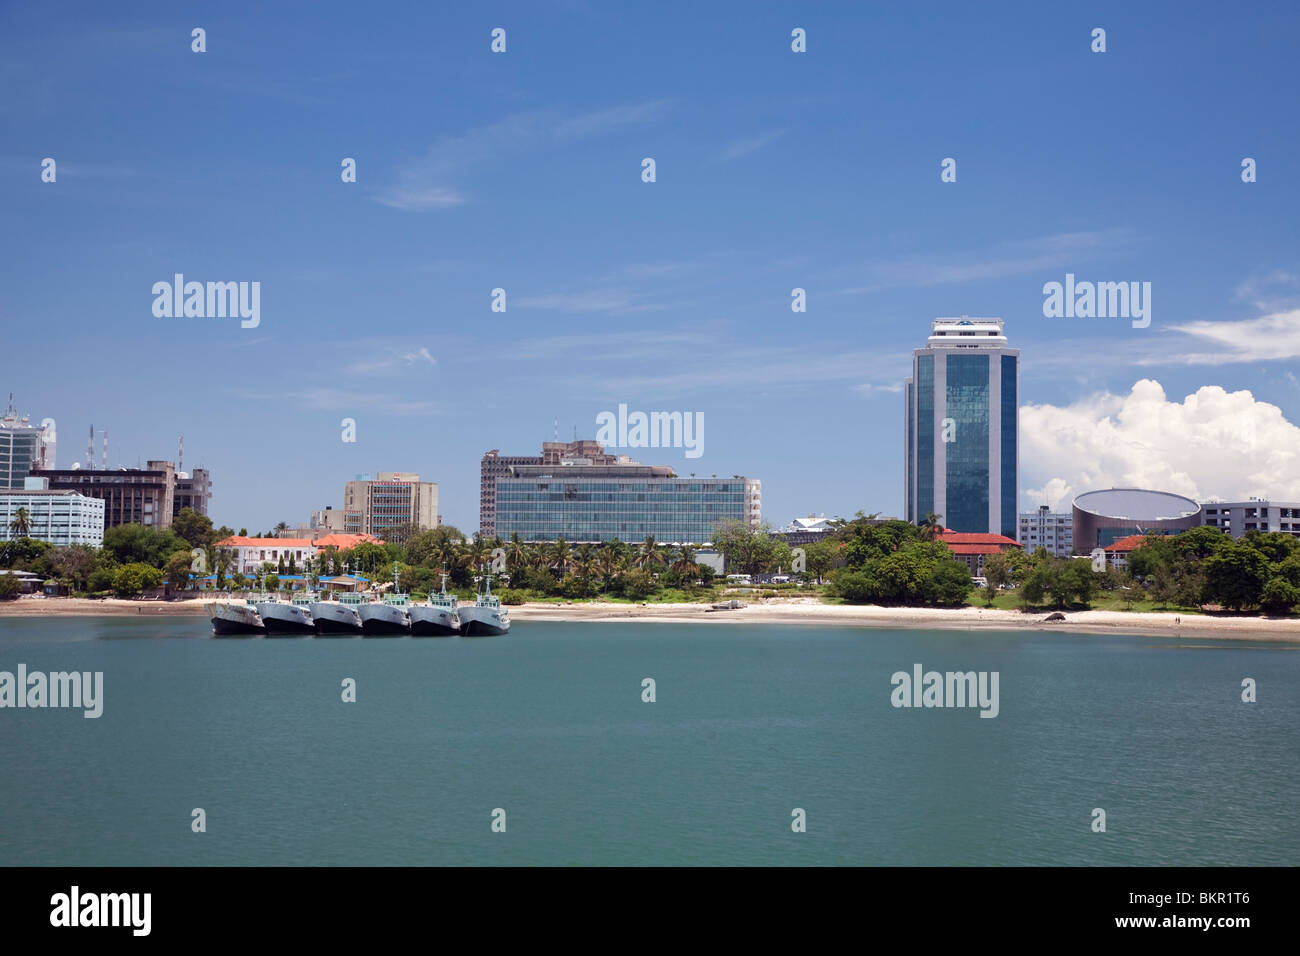 Tanzania, Dar es Salaam. Modern glass skyscrapers stand alongside older buildings on Dar es Salaam's coast. Stock Photo